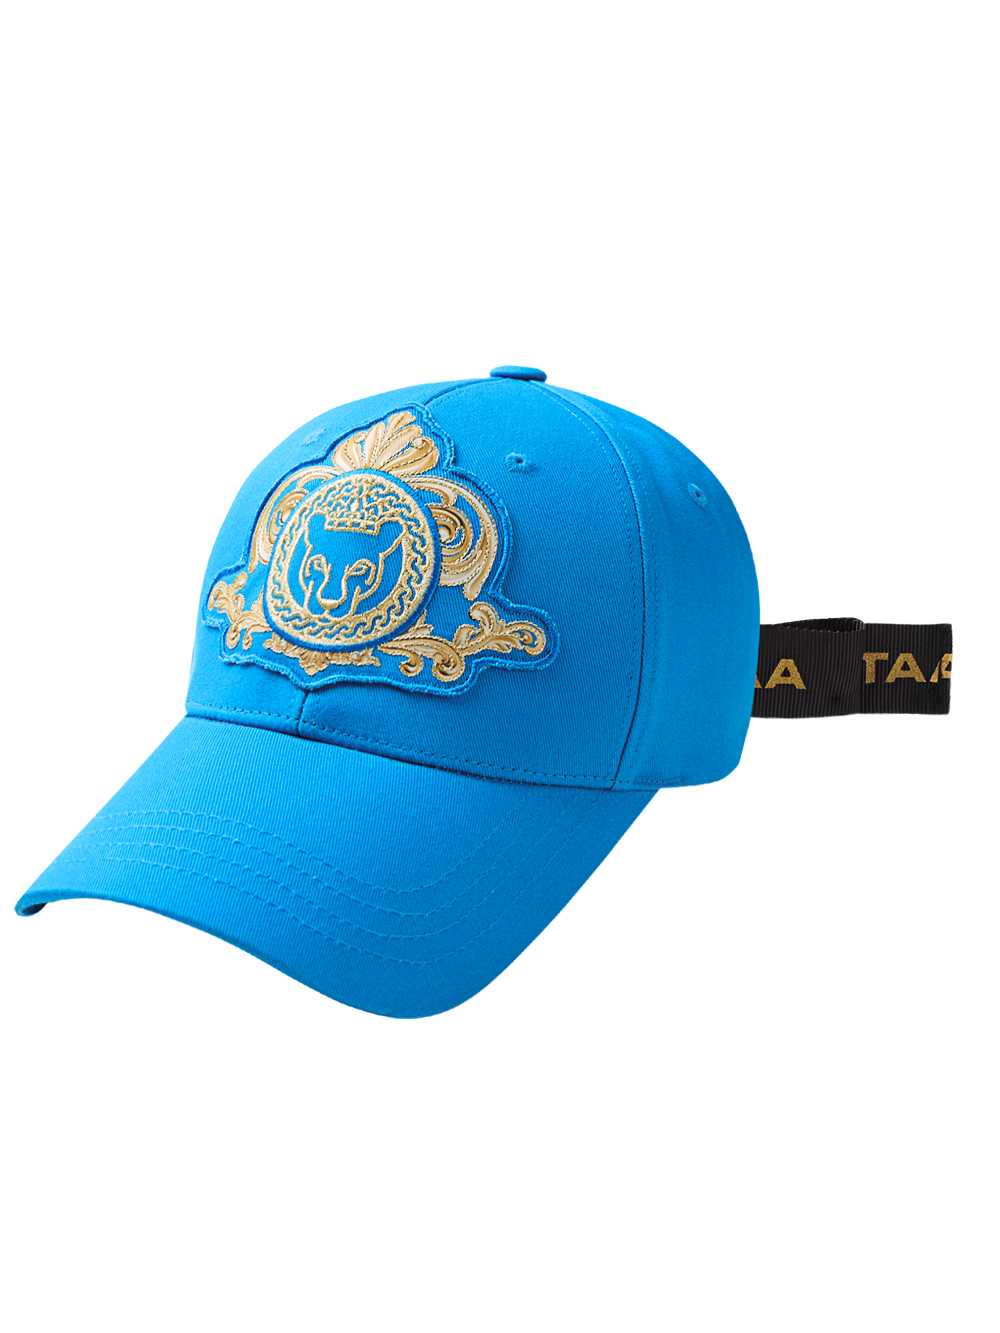 UTAA Grand Gold Crown Panther Ribbon Cap : Blue (UD0GCU286BL)